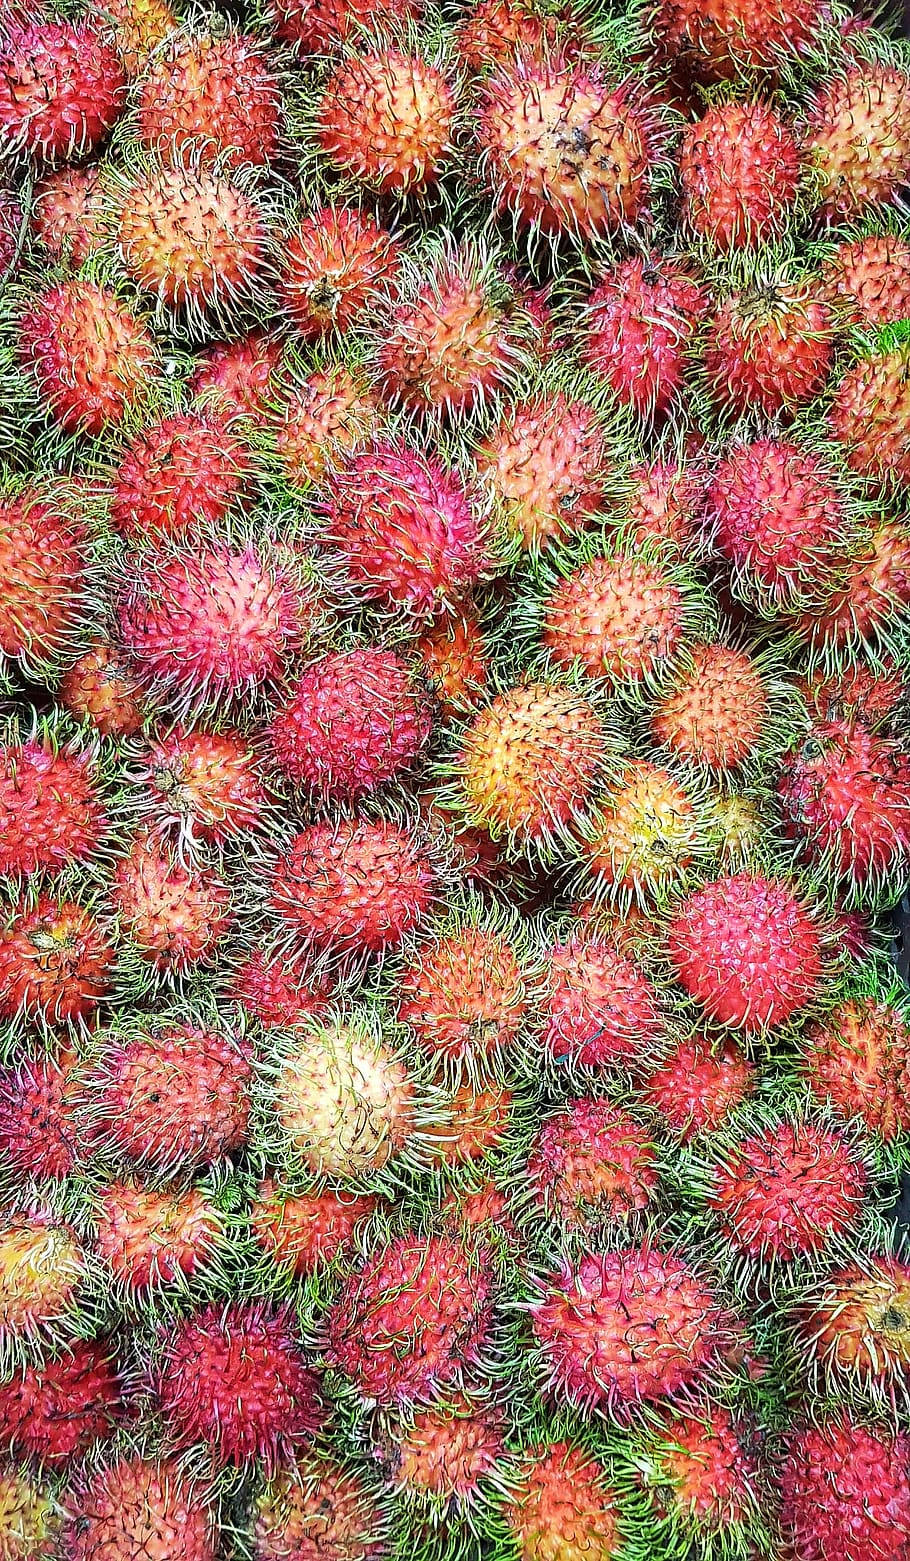 Pälsigljus Röda Rambutan Frukter. (for A Computer Or Mobile Wallpaper Featuring Furry Bright Red Rambutan Fruits) Wallpaper